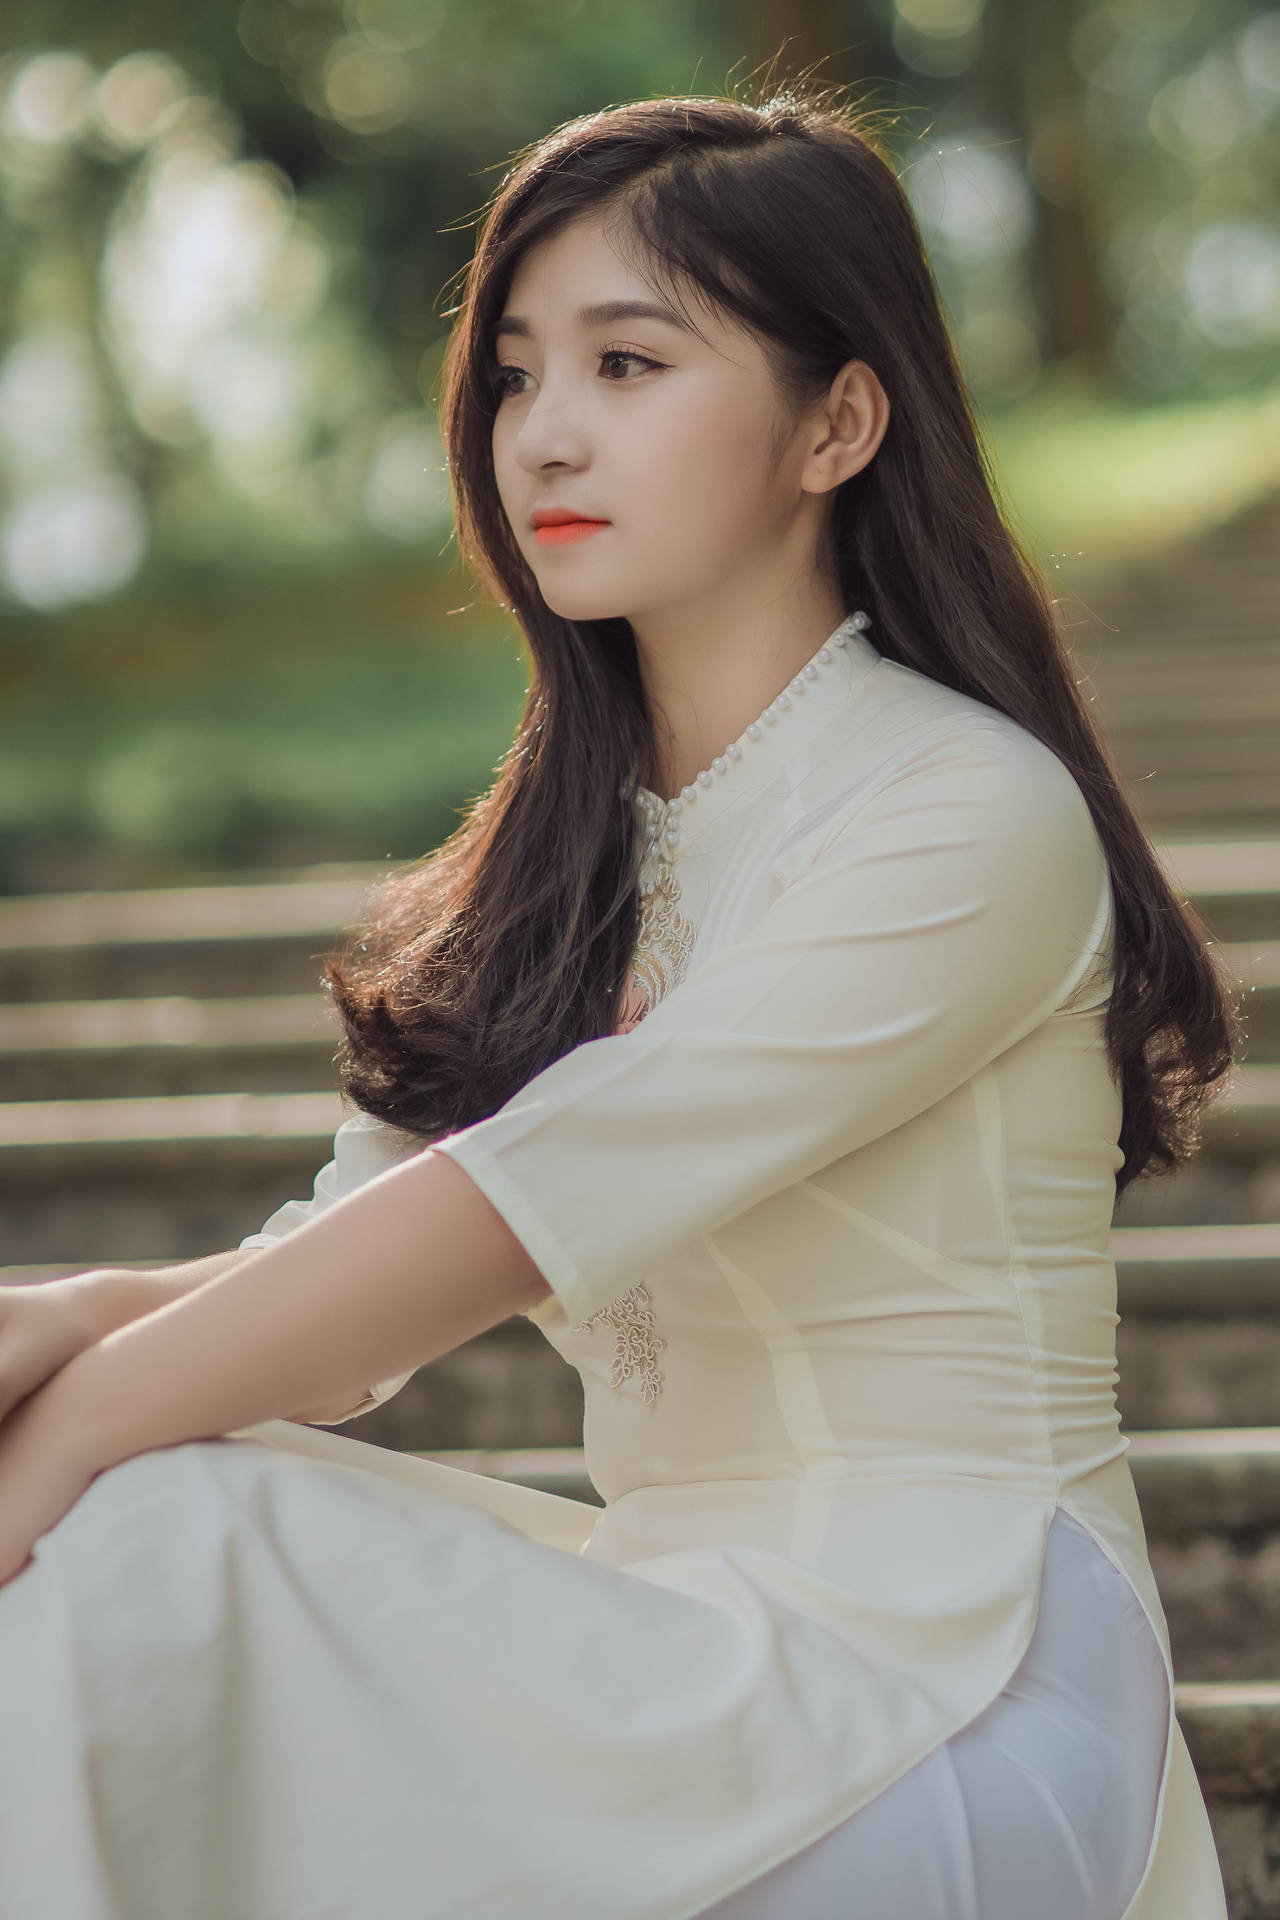 Asian Woman In Elegant White Dress Background